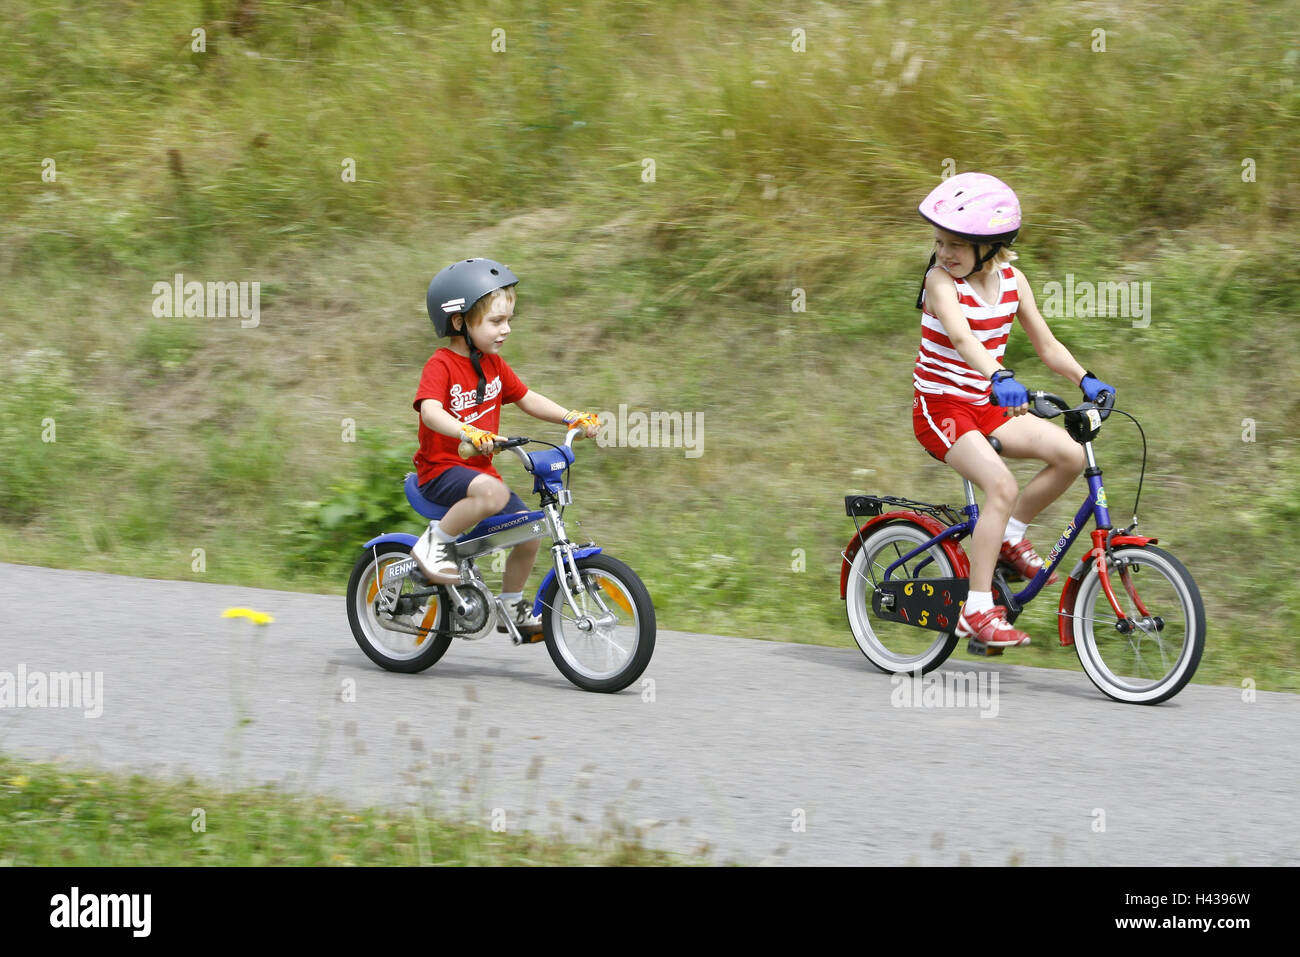 children's driving bike